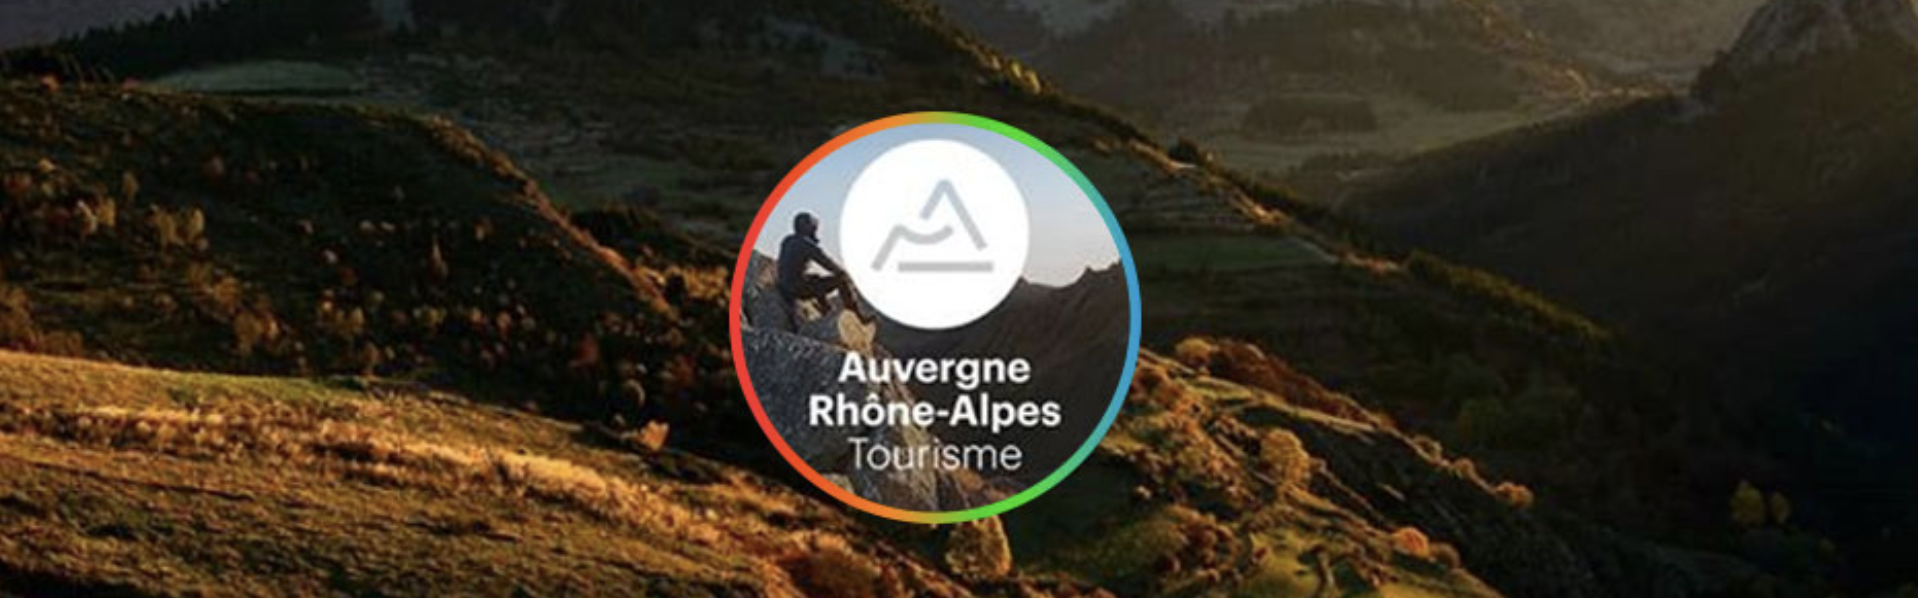 auvergne-rhone-alpes-tourisme-interview-socialmedia